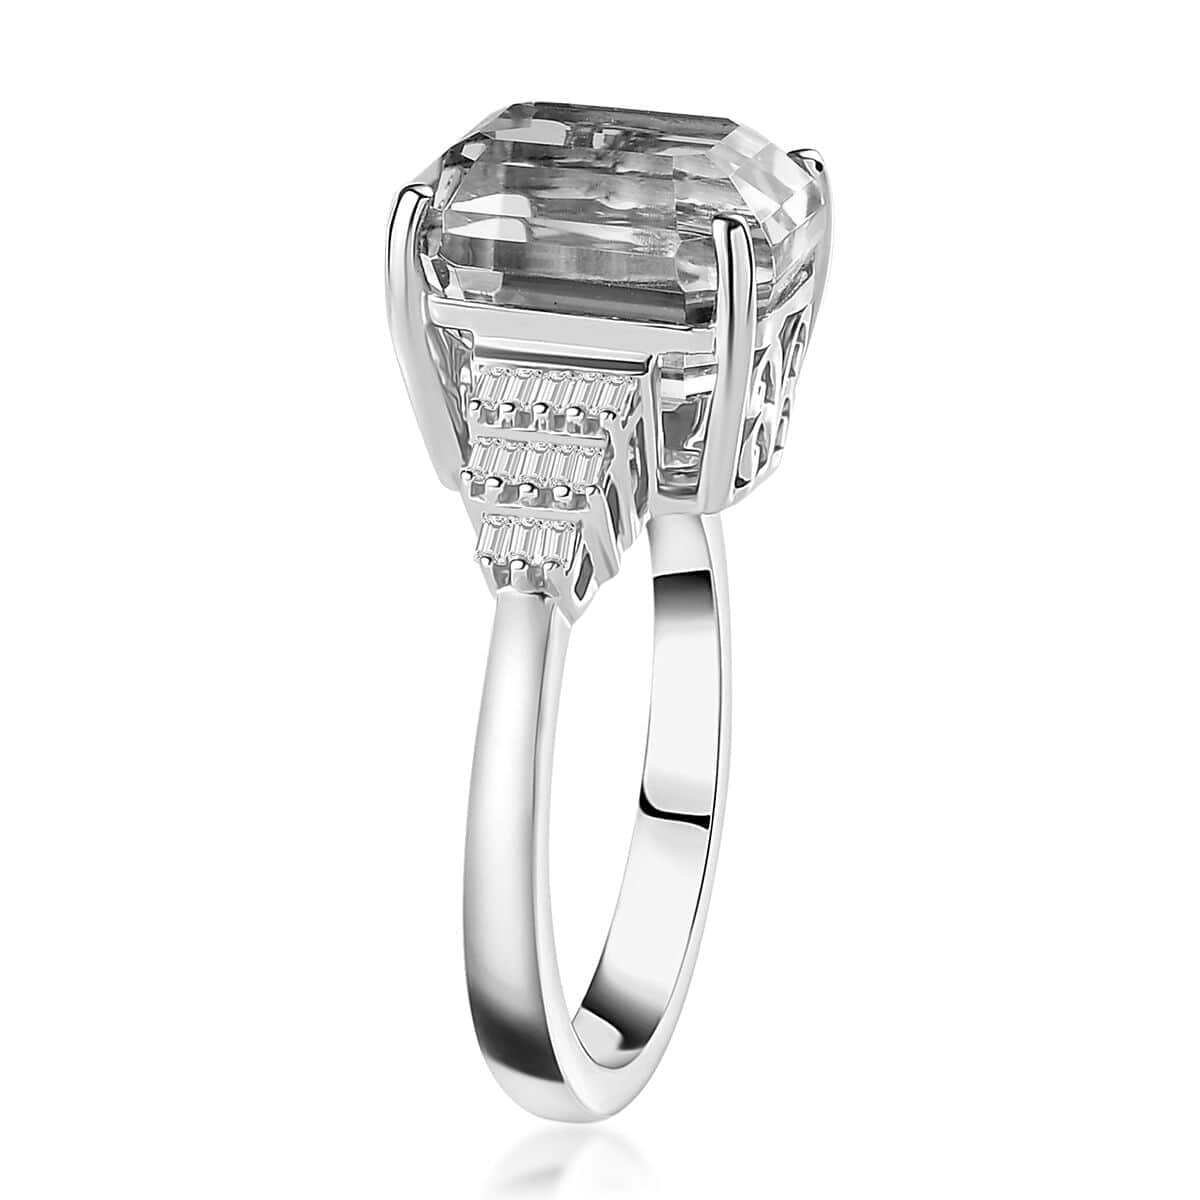 Luxoro 10K White Gold AAA Patroke Kunzite, Diamond (I2) (0.18 cts) Ring (Size 7.0) (4 g) 8.70 ctw image number 3